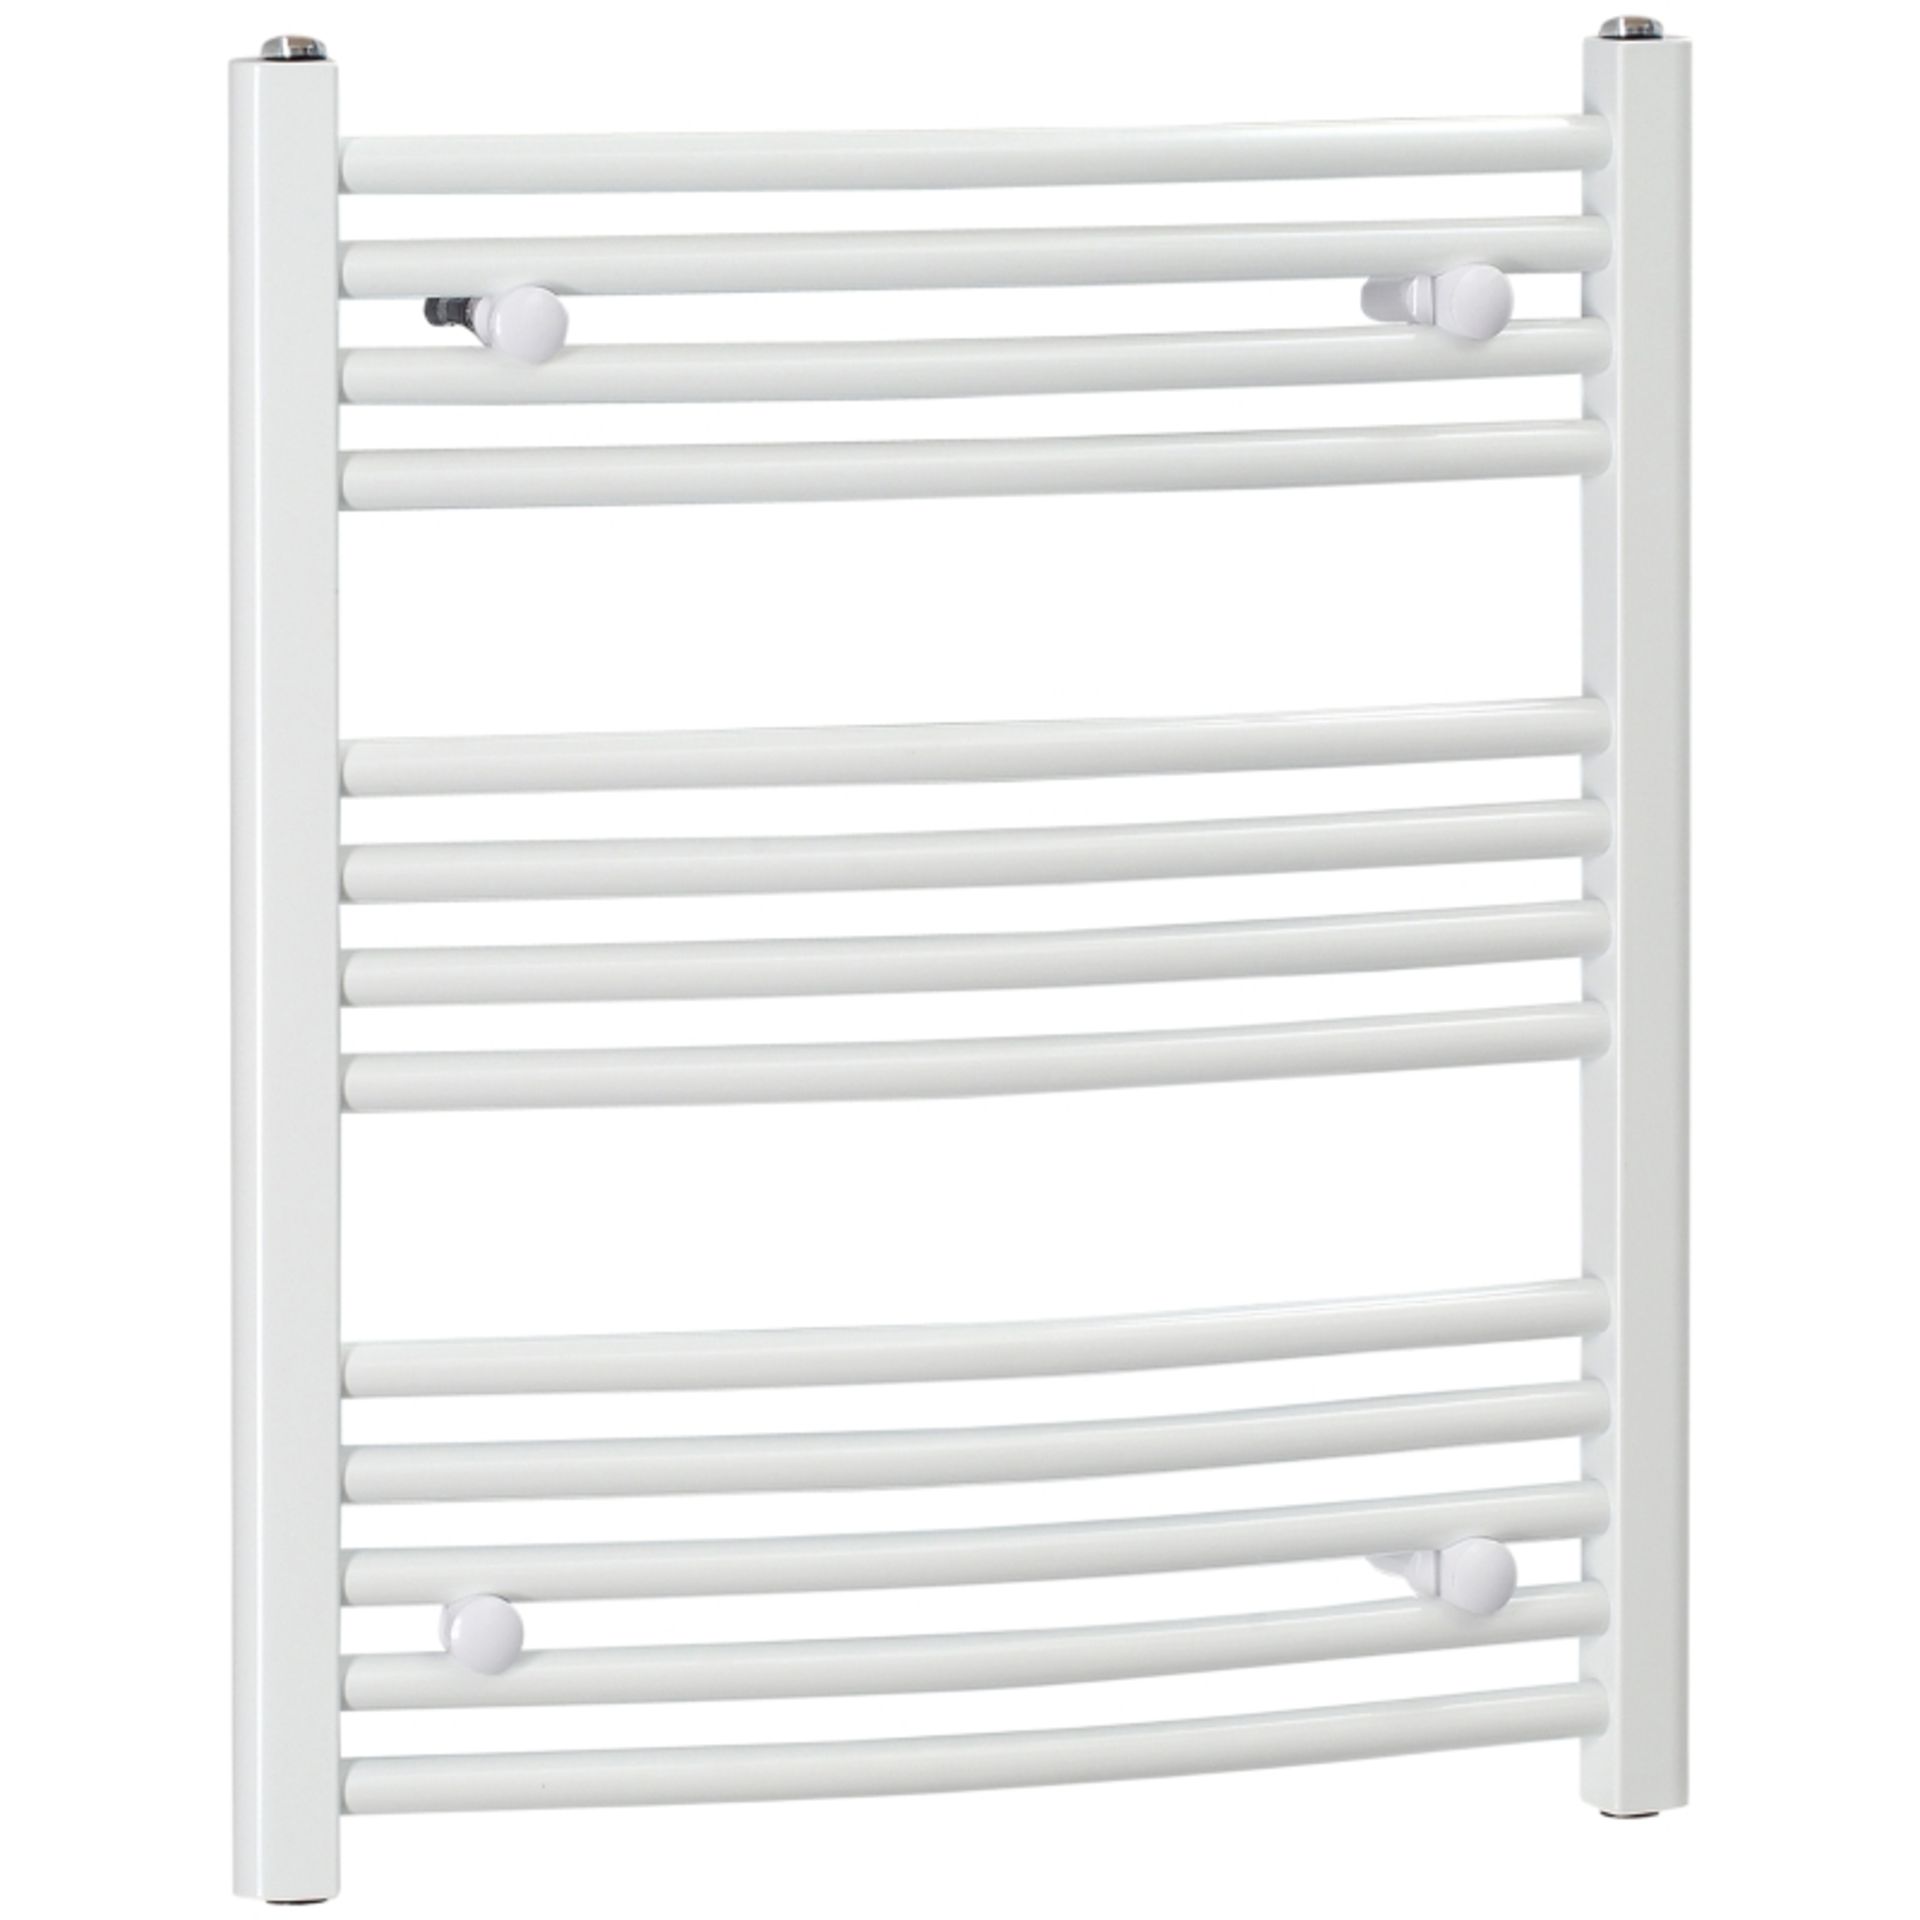 RPP £79.99 -HOMCOM Curved Heated Towel Rail, Hydronic Bathroom Ladder Radiator Towel Warmer For